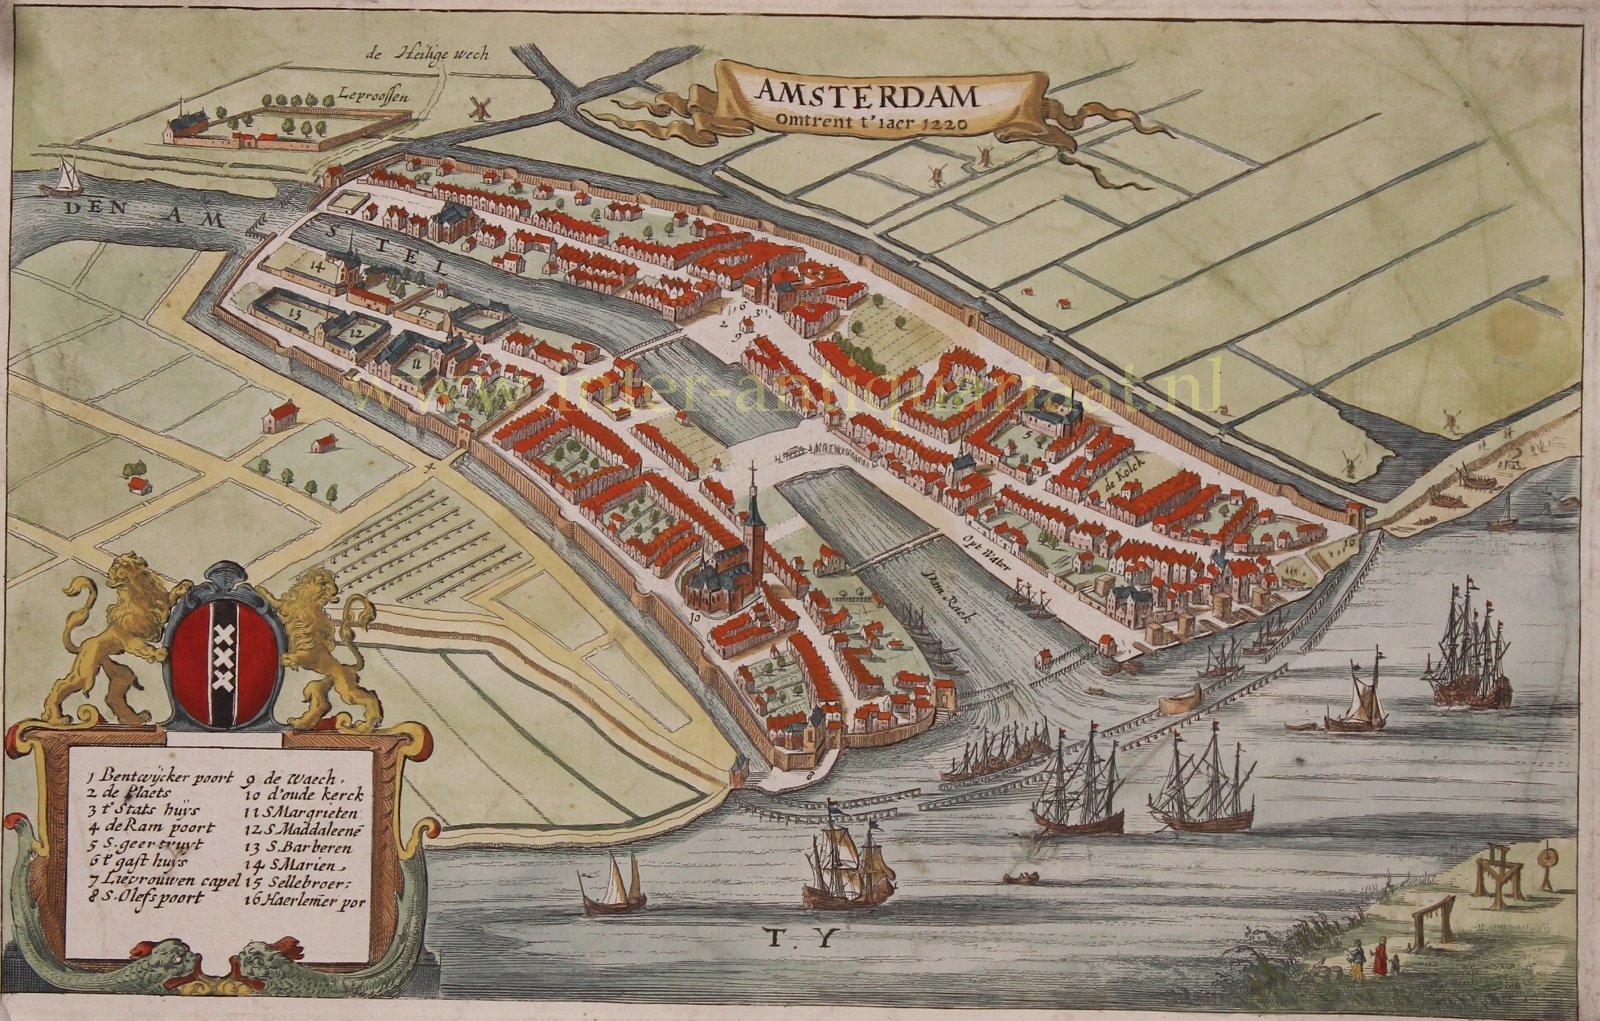  - Amsterdam around 1220 - Otto and Jodocus Smient, 1662/1663